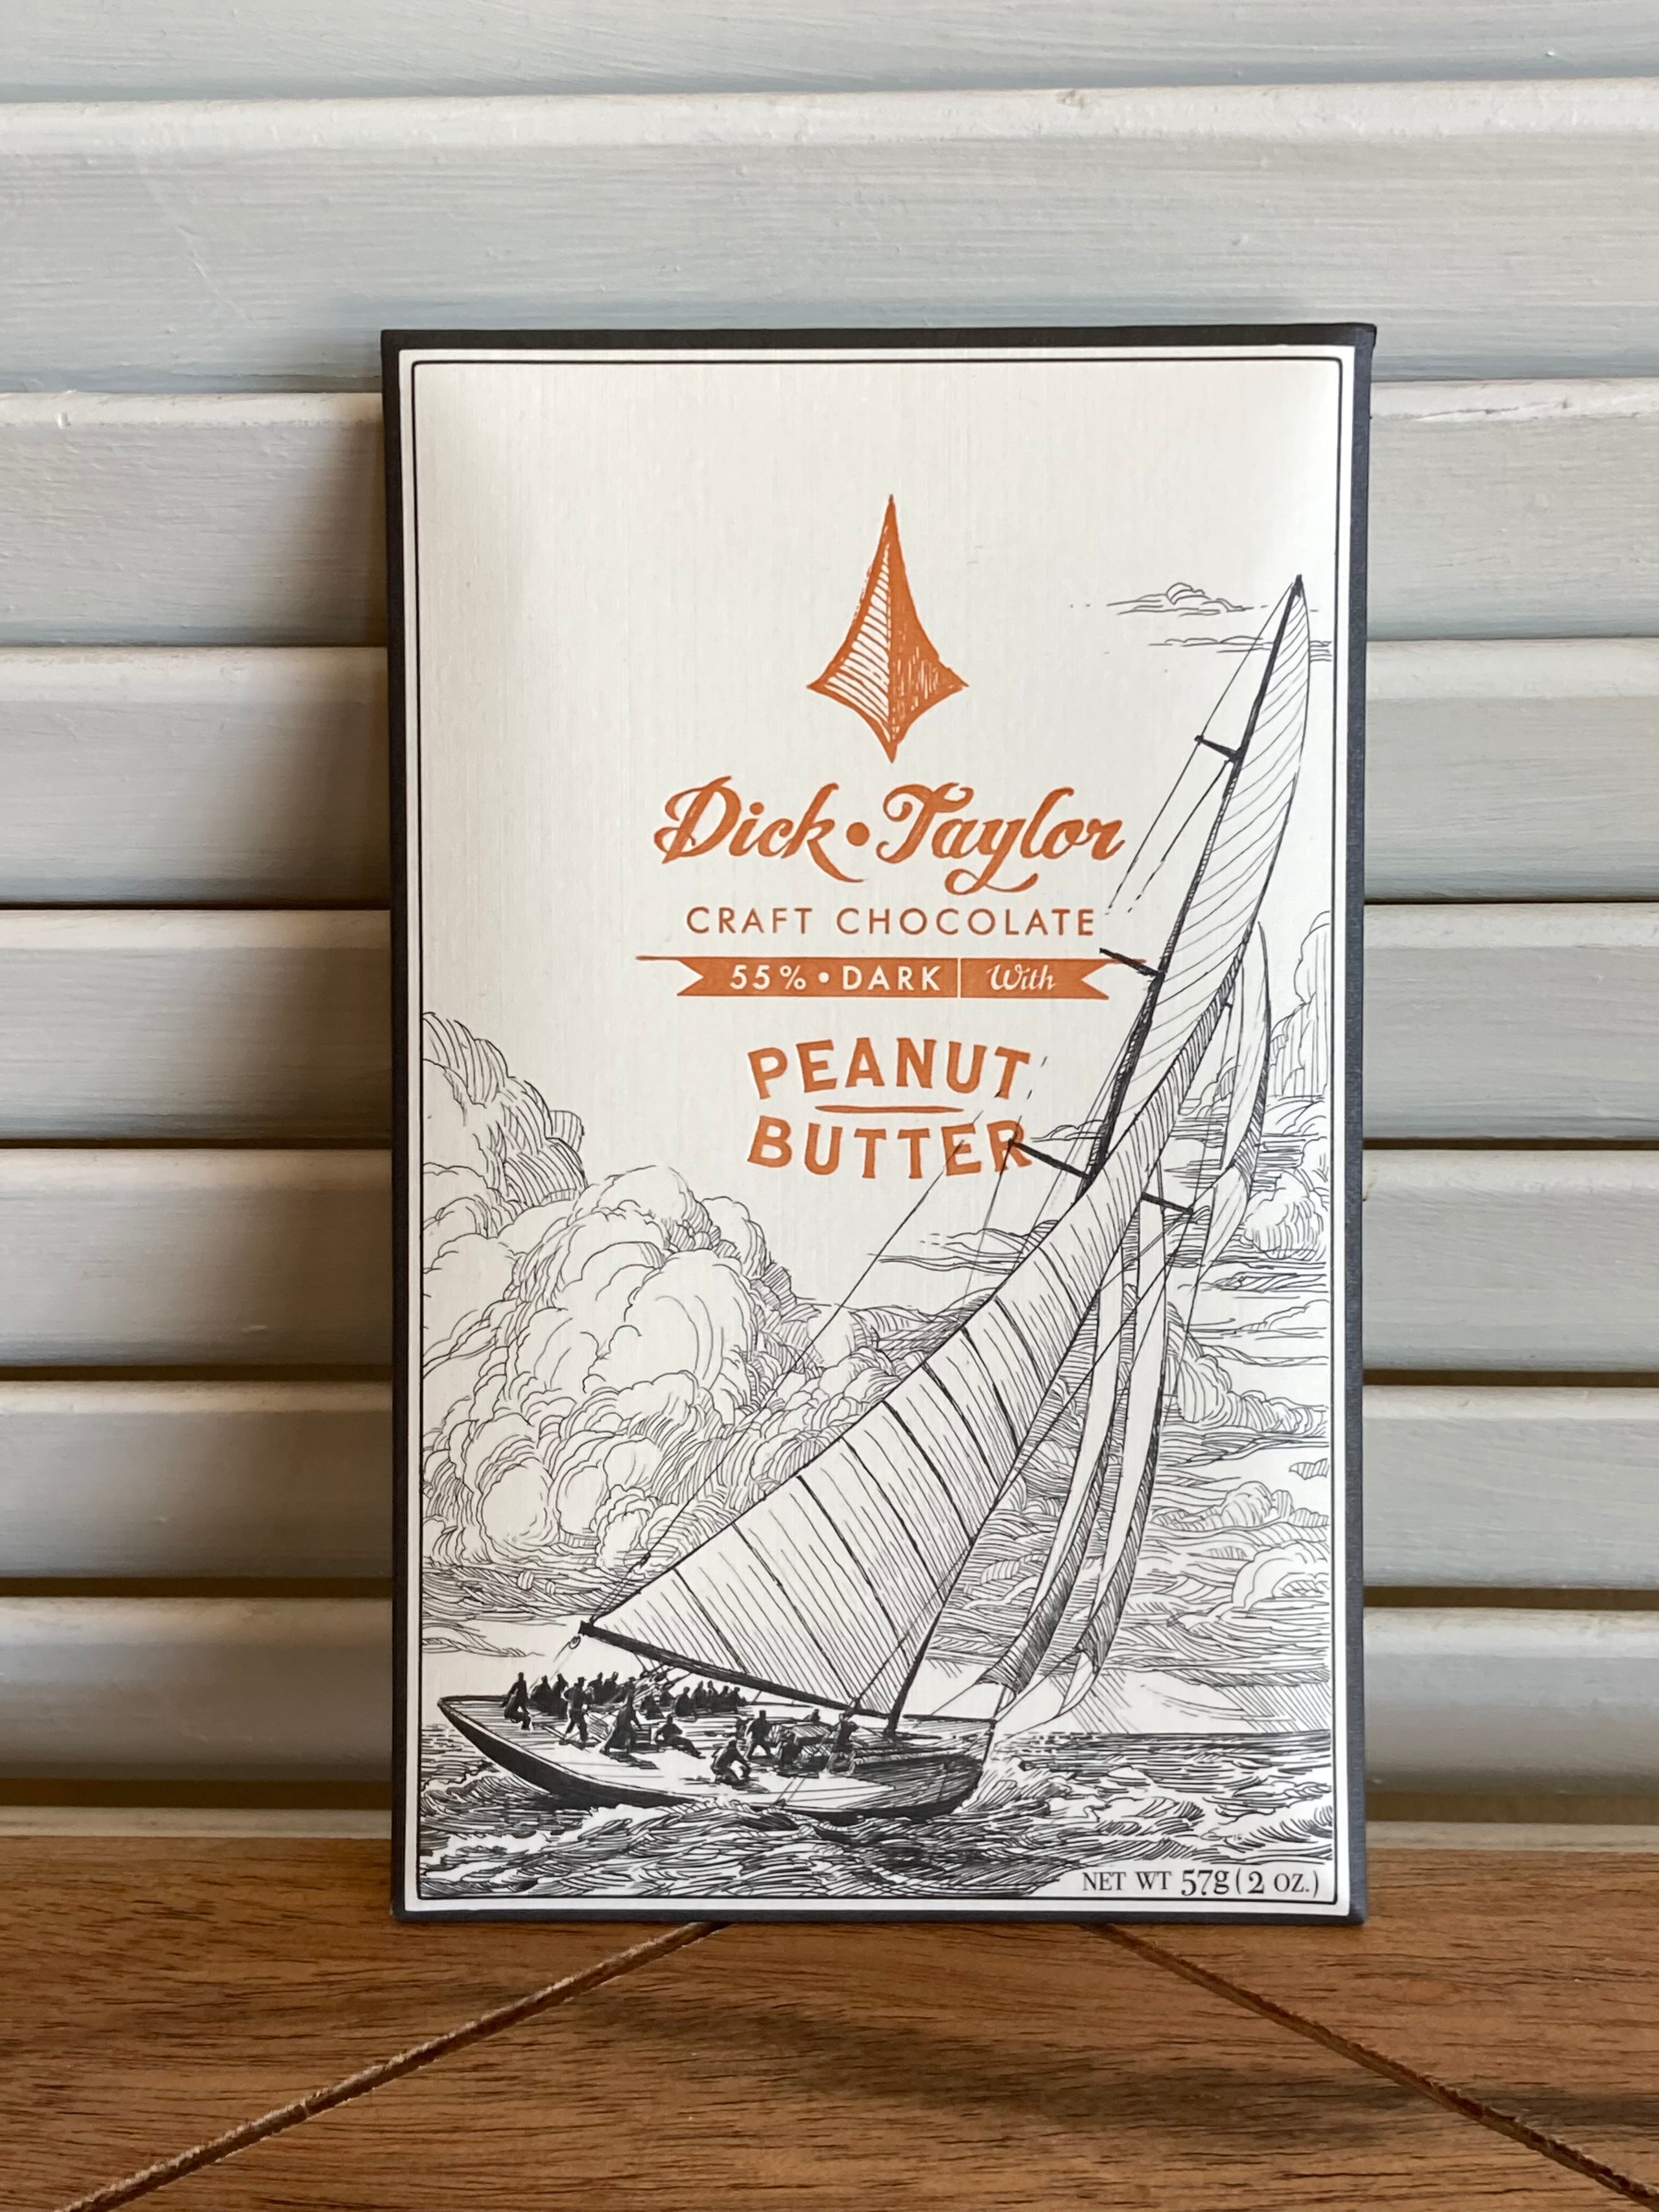 Peanut Butter 55% Dark chocolate bar from Dick Taylor Craft Chocolate